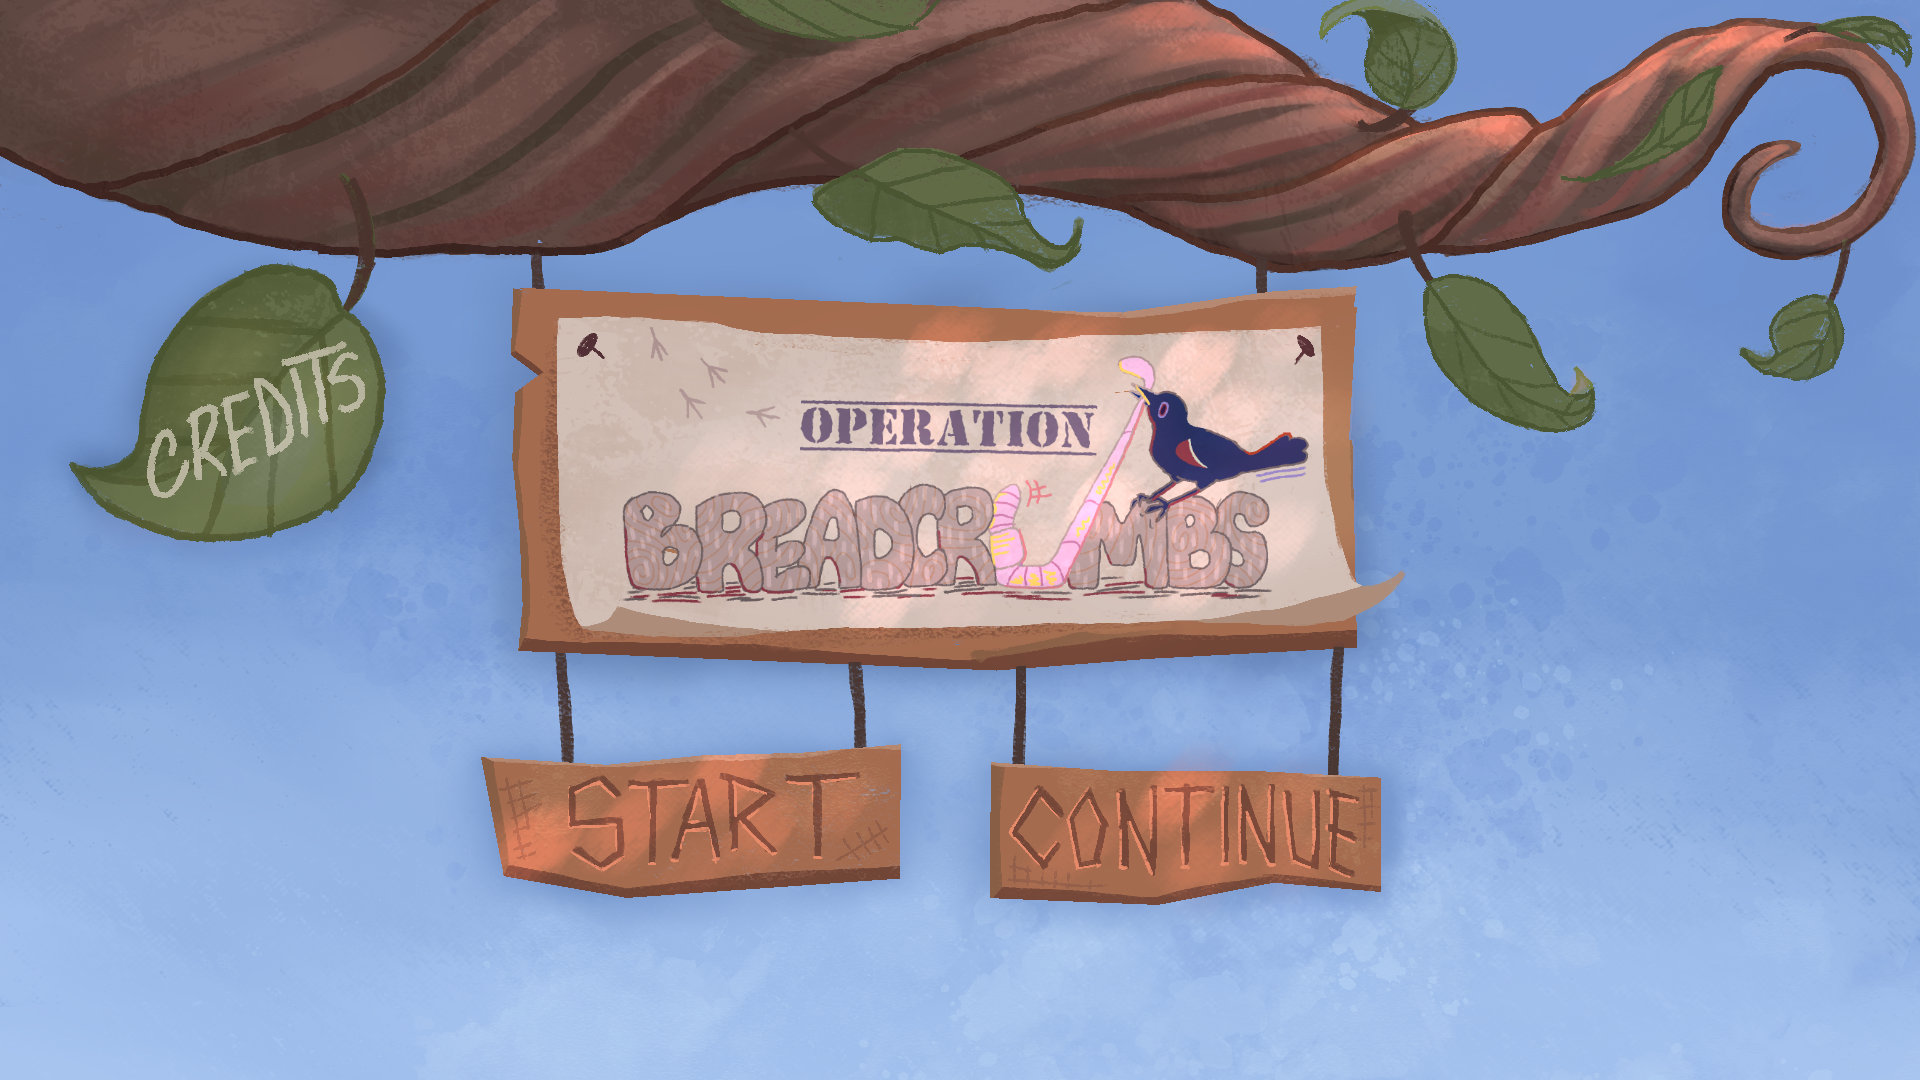 Operation Breadcrumbs